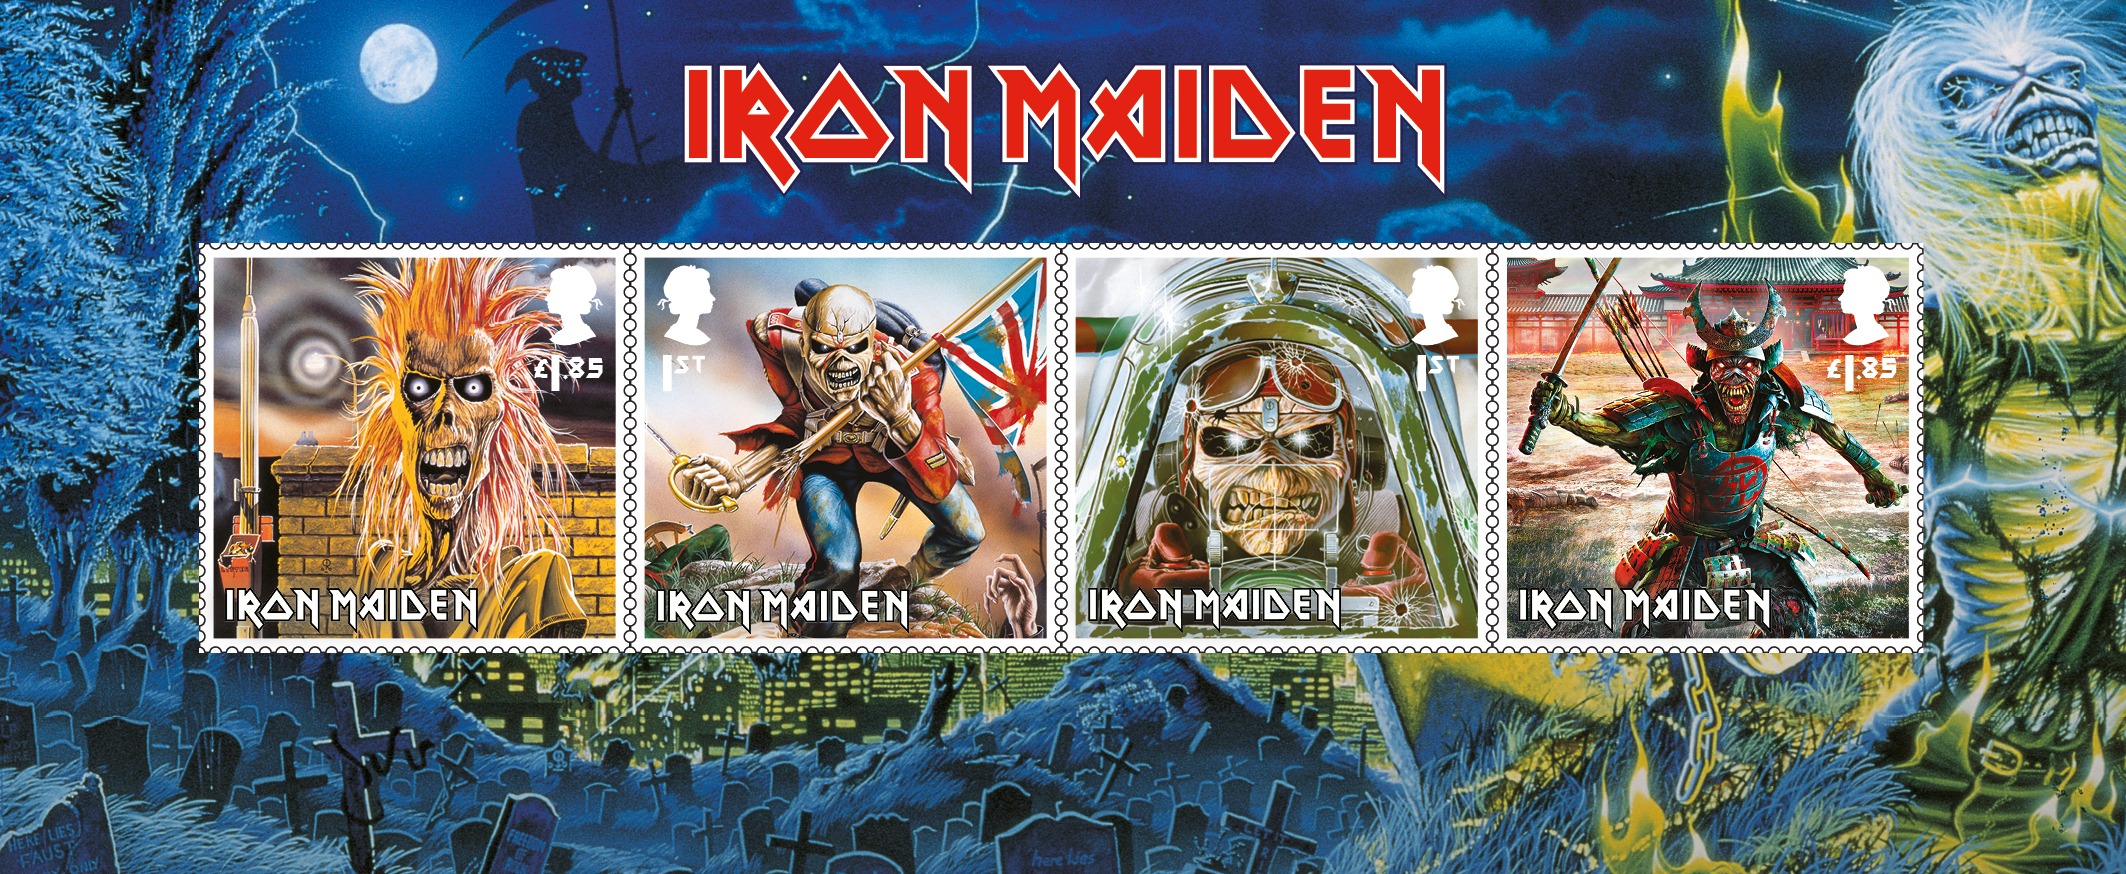 iron maiden - sellos pic 2